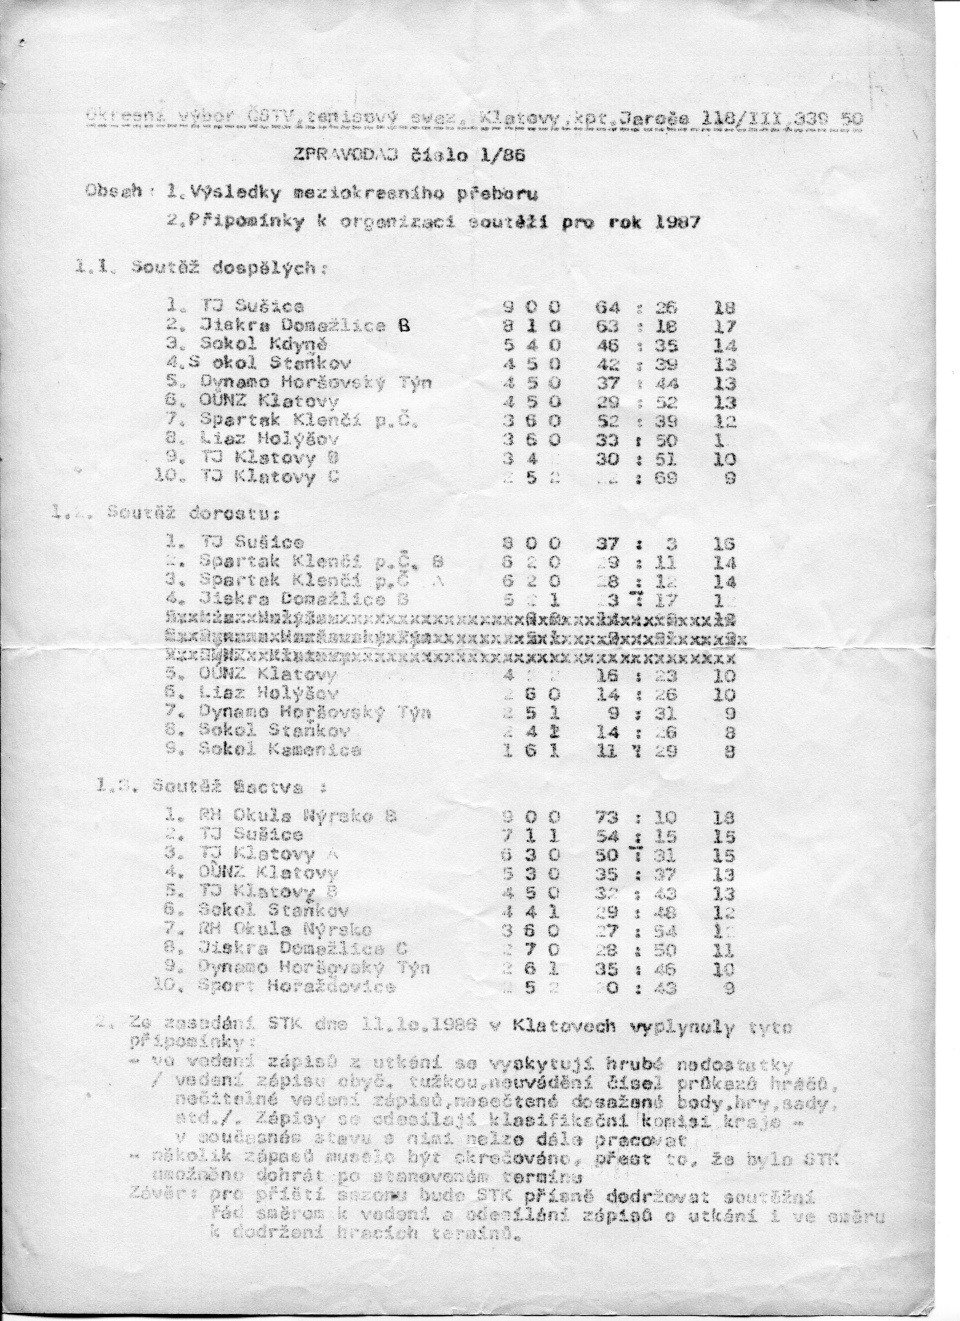 Výsledky družstev v roce 1986